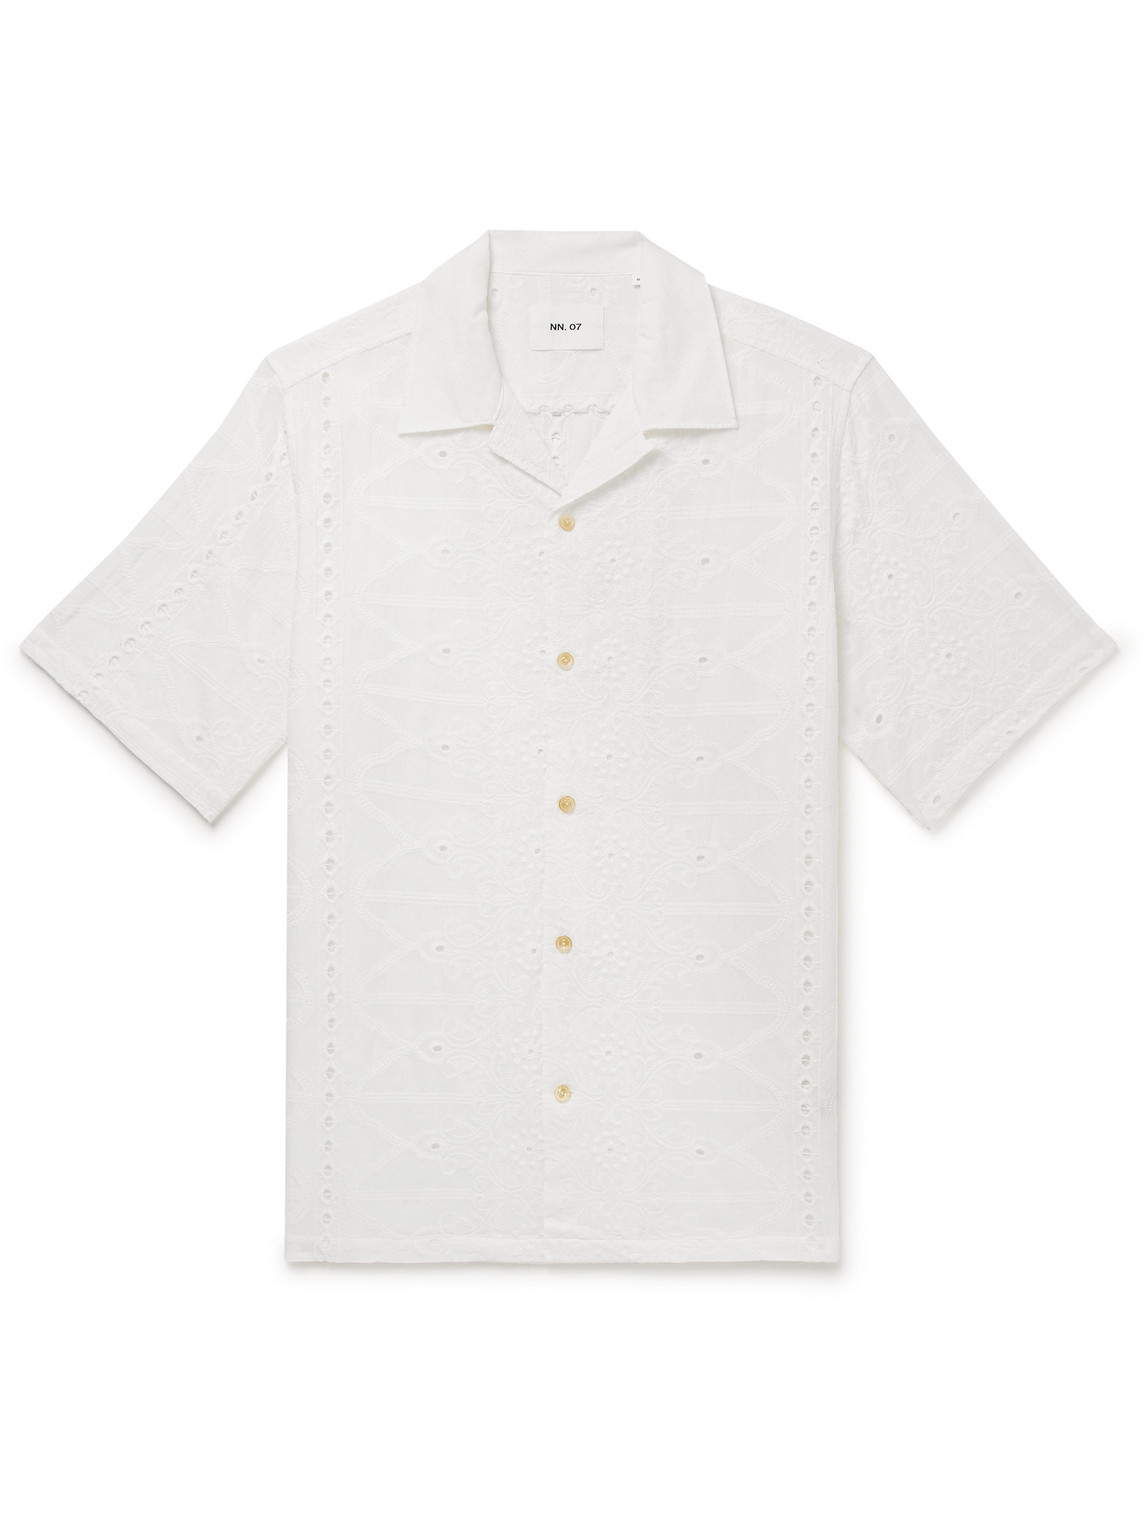 NN07 - Julio 5392 Convertible-Collar Broderie Anglaise Cotton-Voile Shirt - Men - White - L von NN07